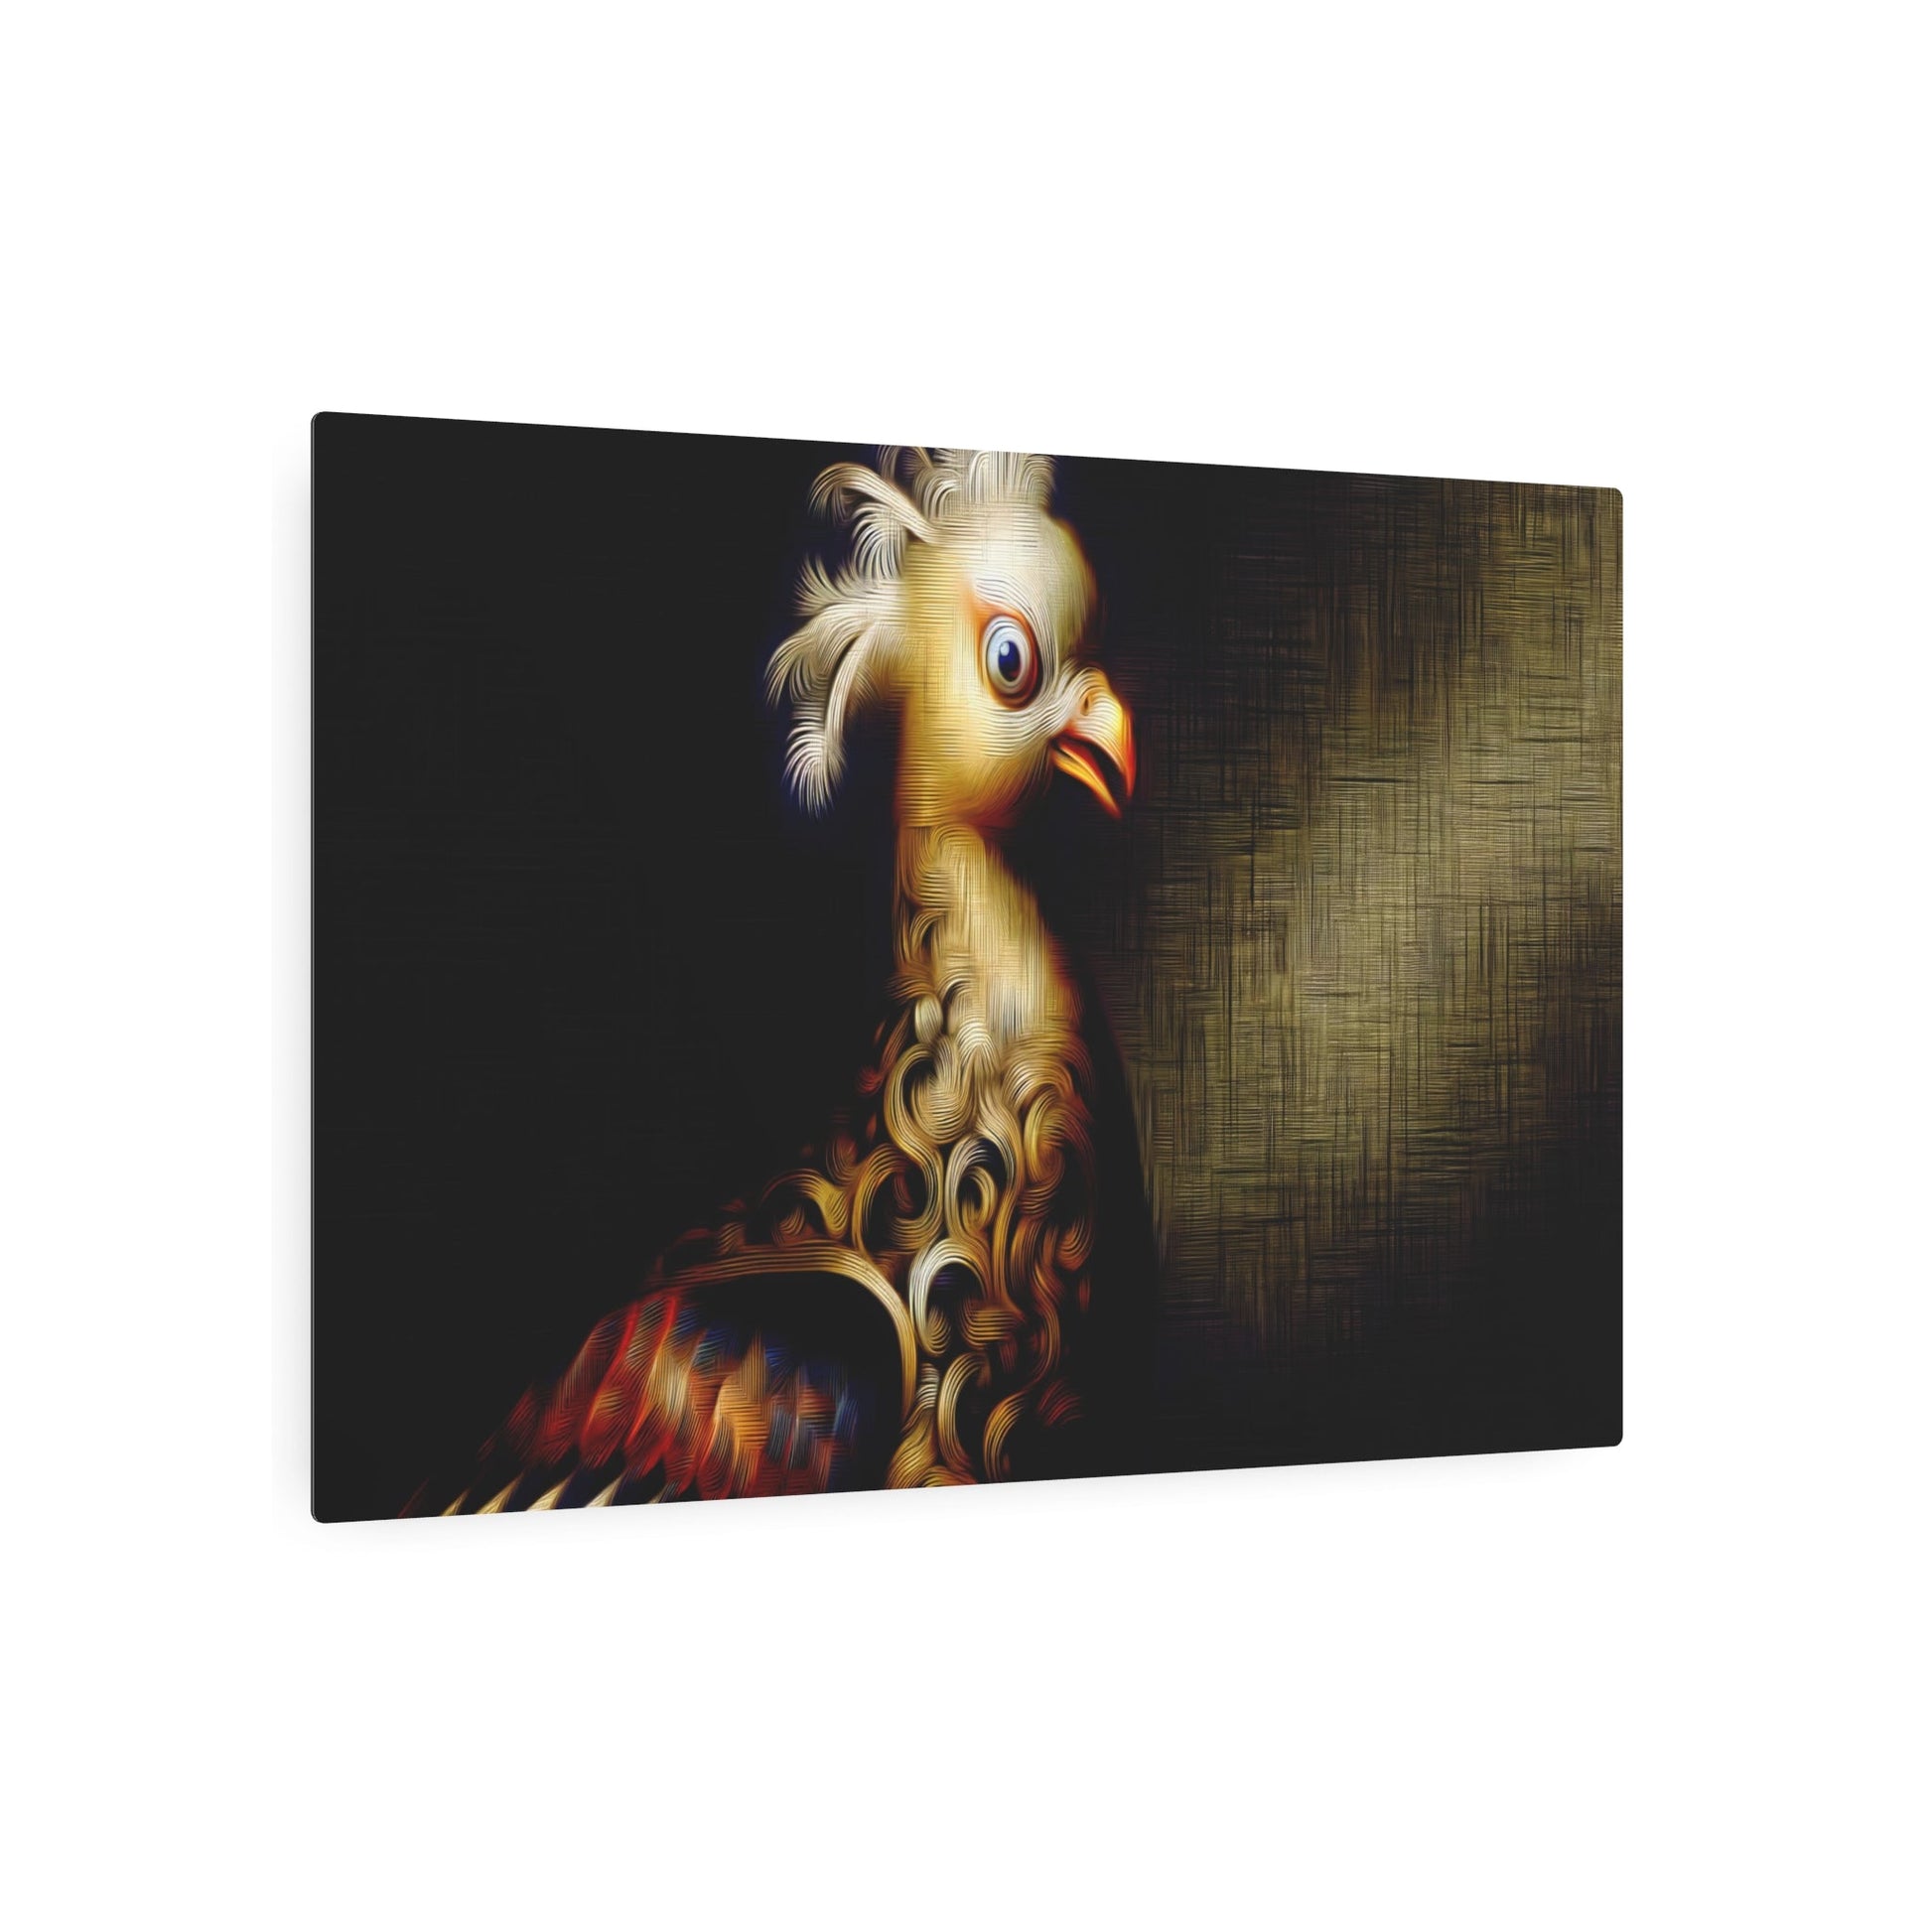 Metal Poster Art | "Baroque Style Bird Artwork - Intricate Detailing Embodying Opulence, Grandeur and Drama - Western Art Styles Collection" - Metal Poster Art 36″ x 24″ (Horizontal) 0.12''